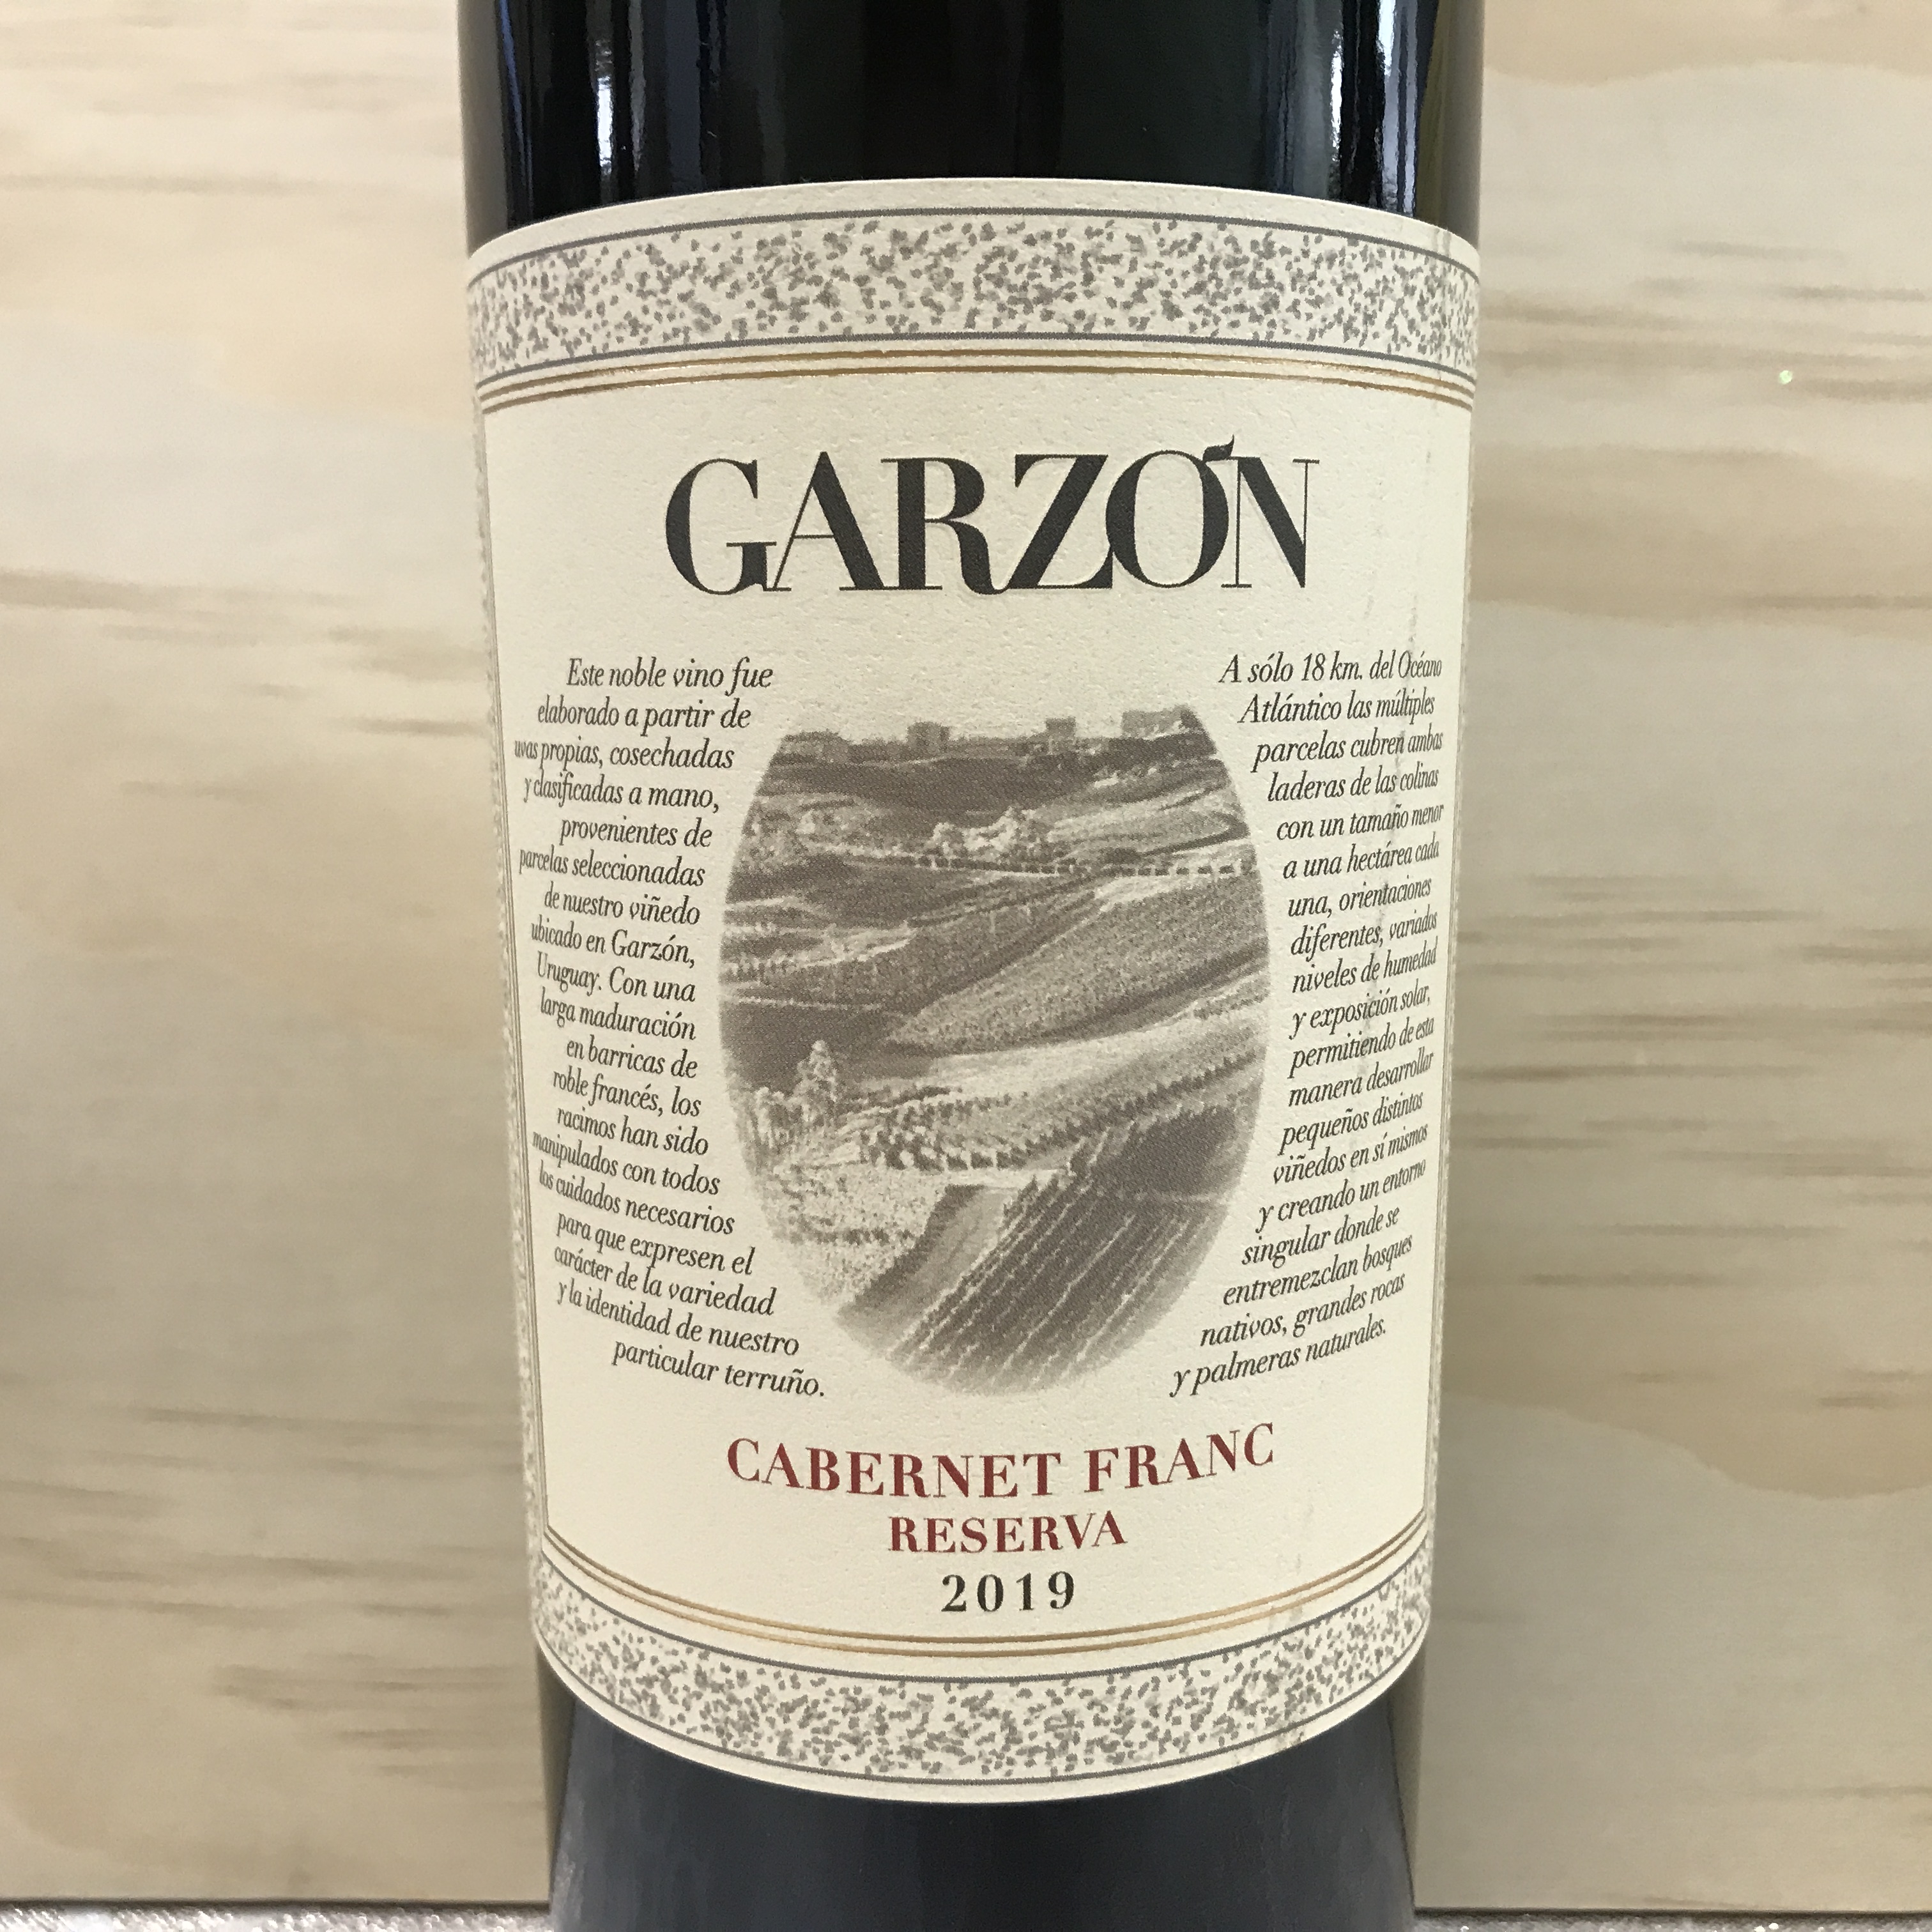 Garzon Cabernet Franc Reserva 2019